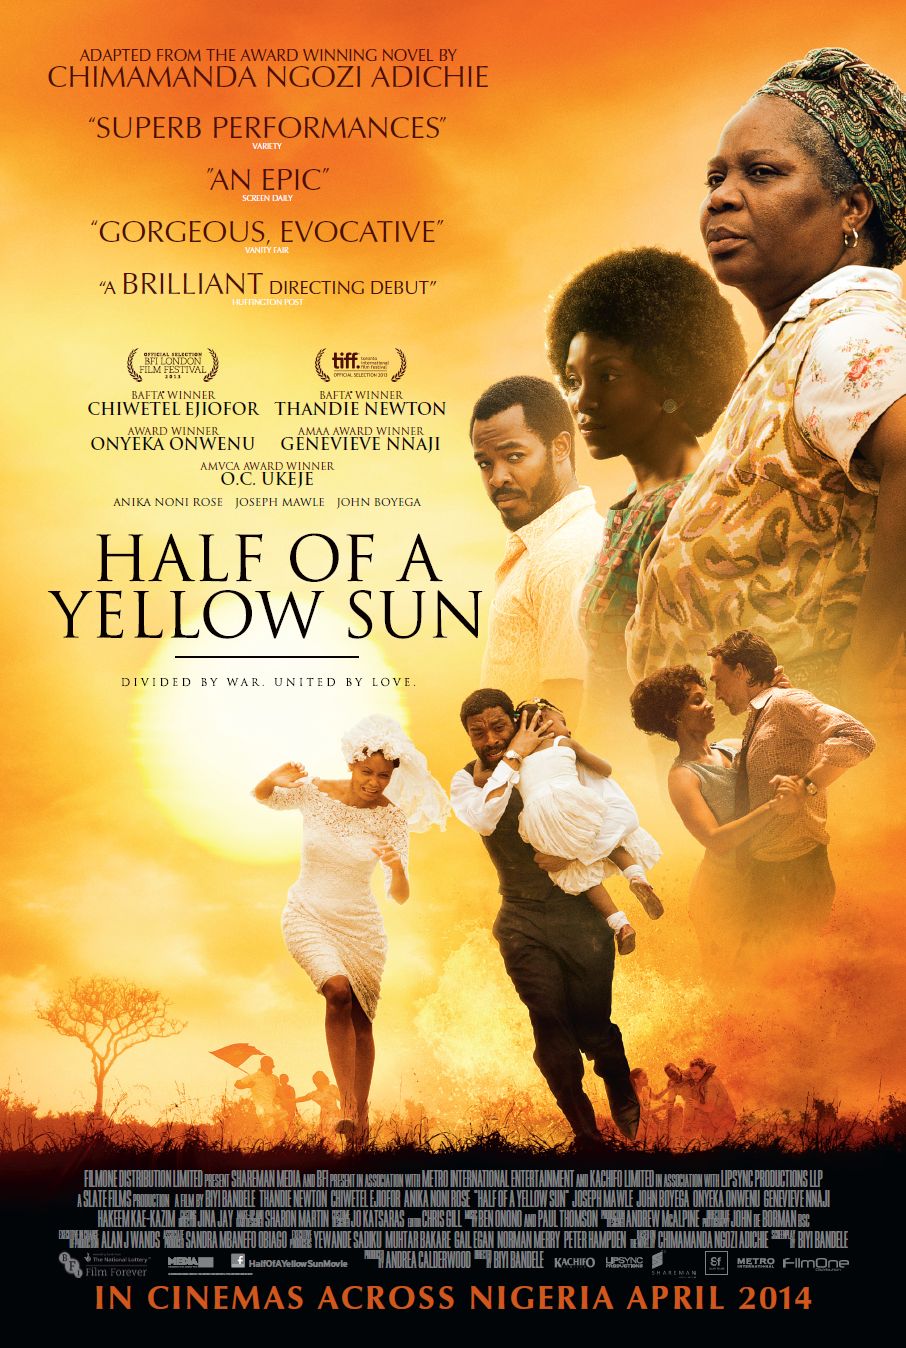 Nigeria Censor Board Halts The Release Chimamanda Adichie’s “Half Of A Yellow Sun” The Movie